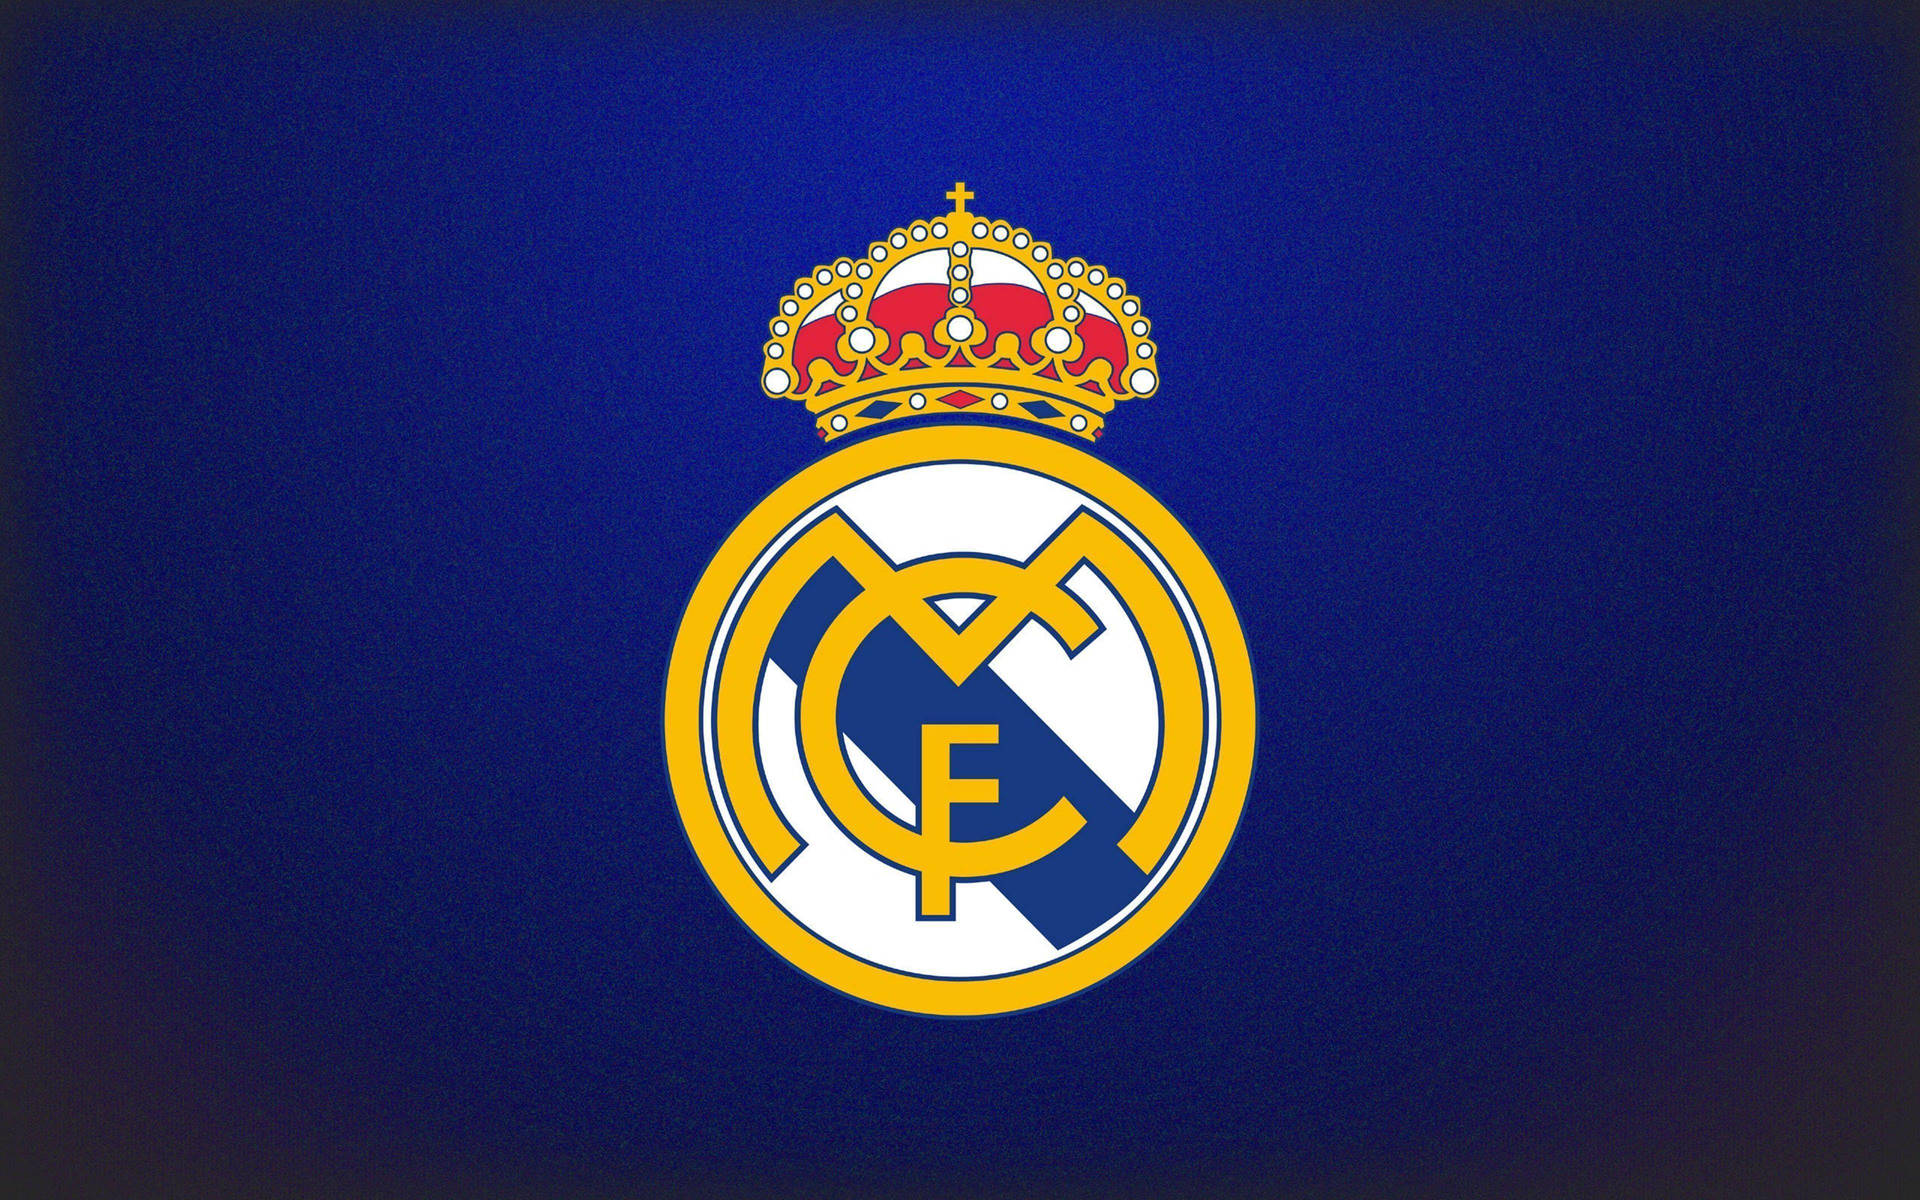 Football Club Real Madrid Background